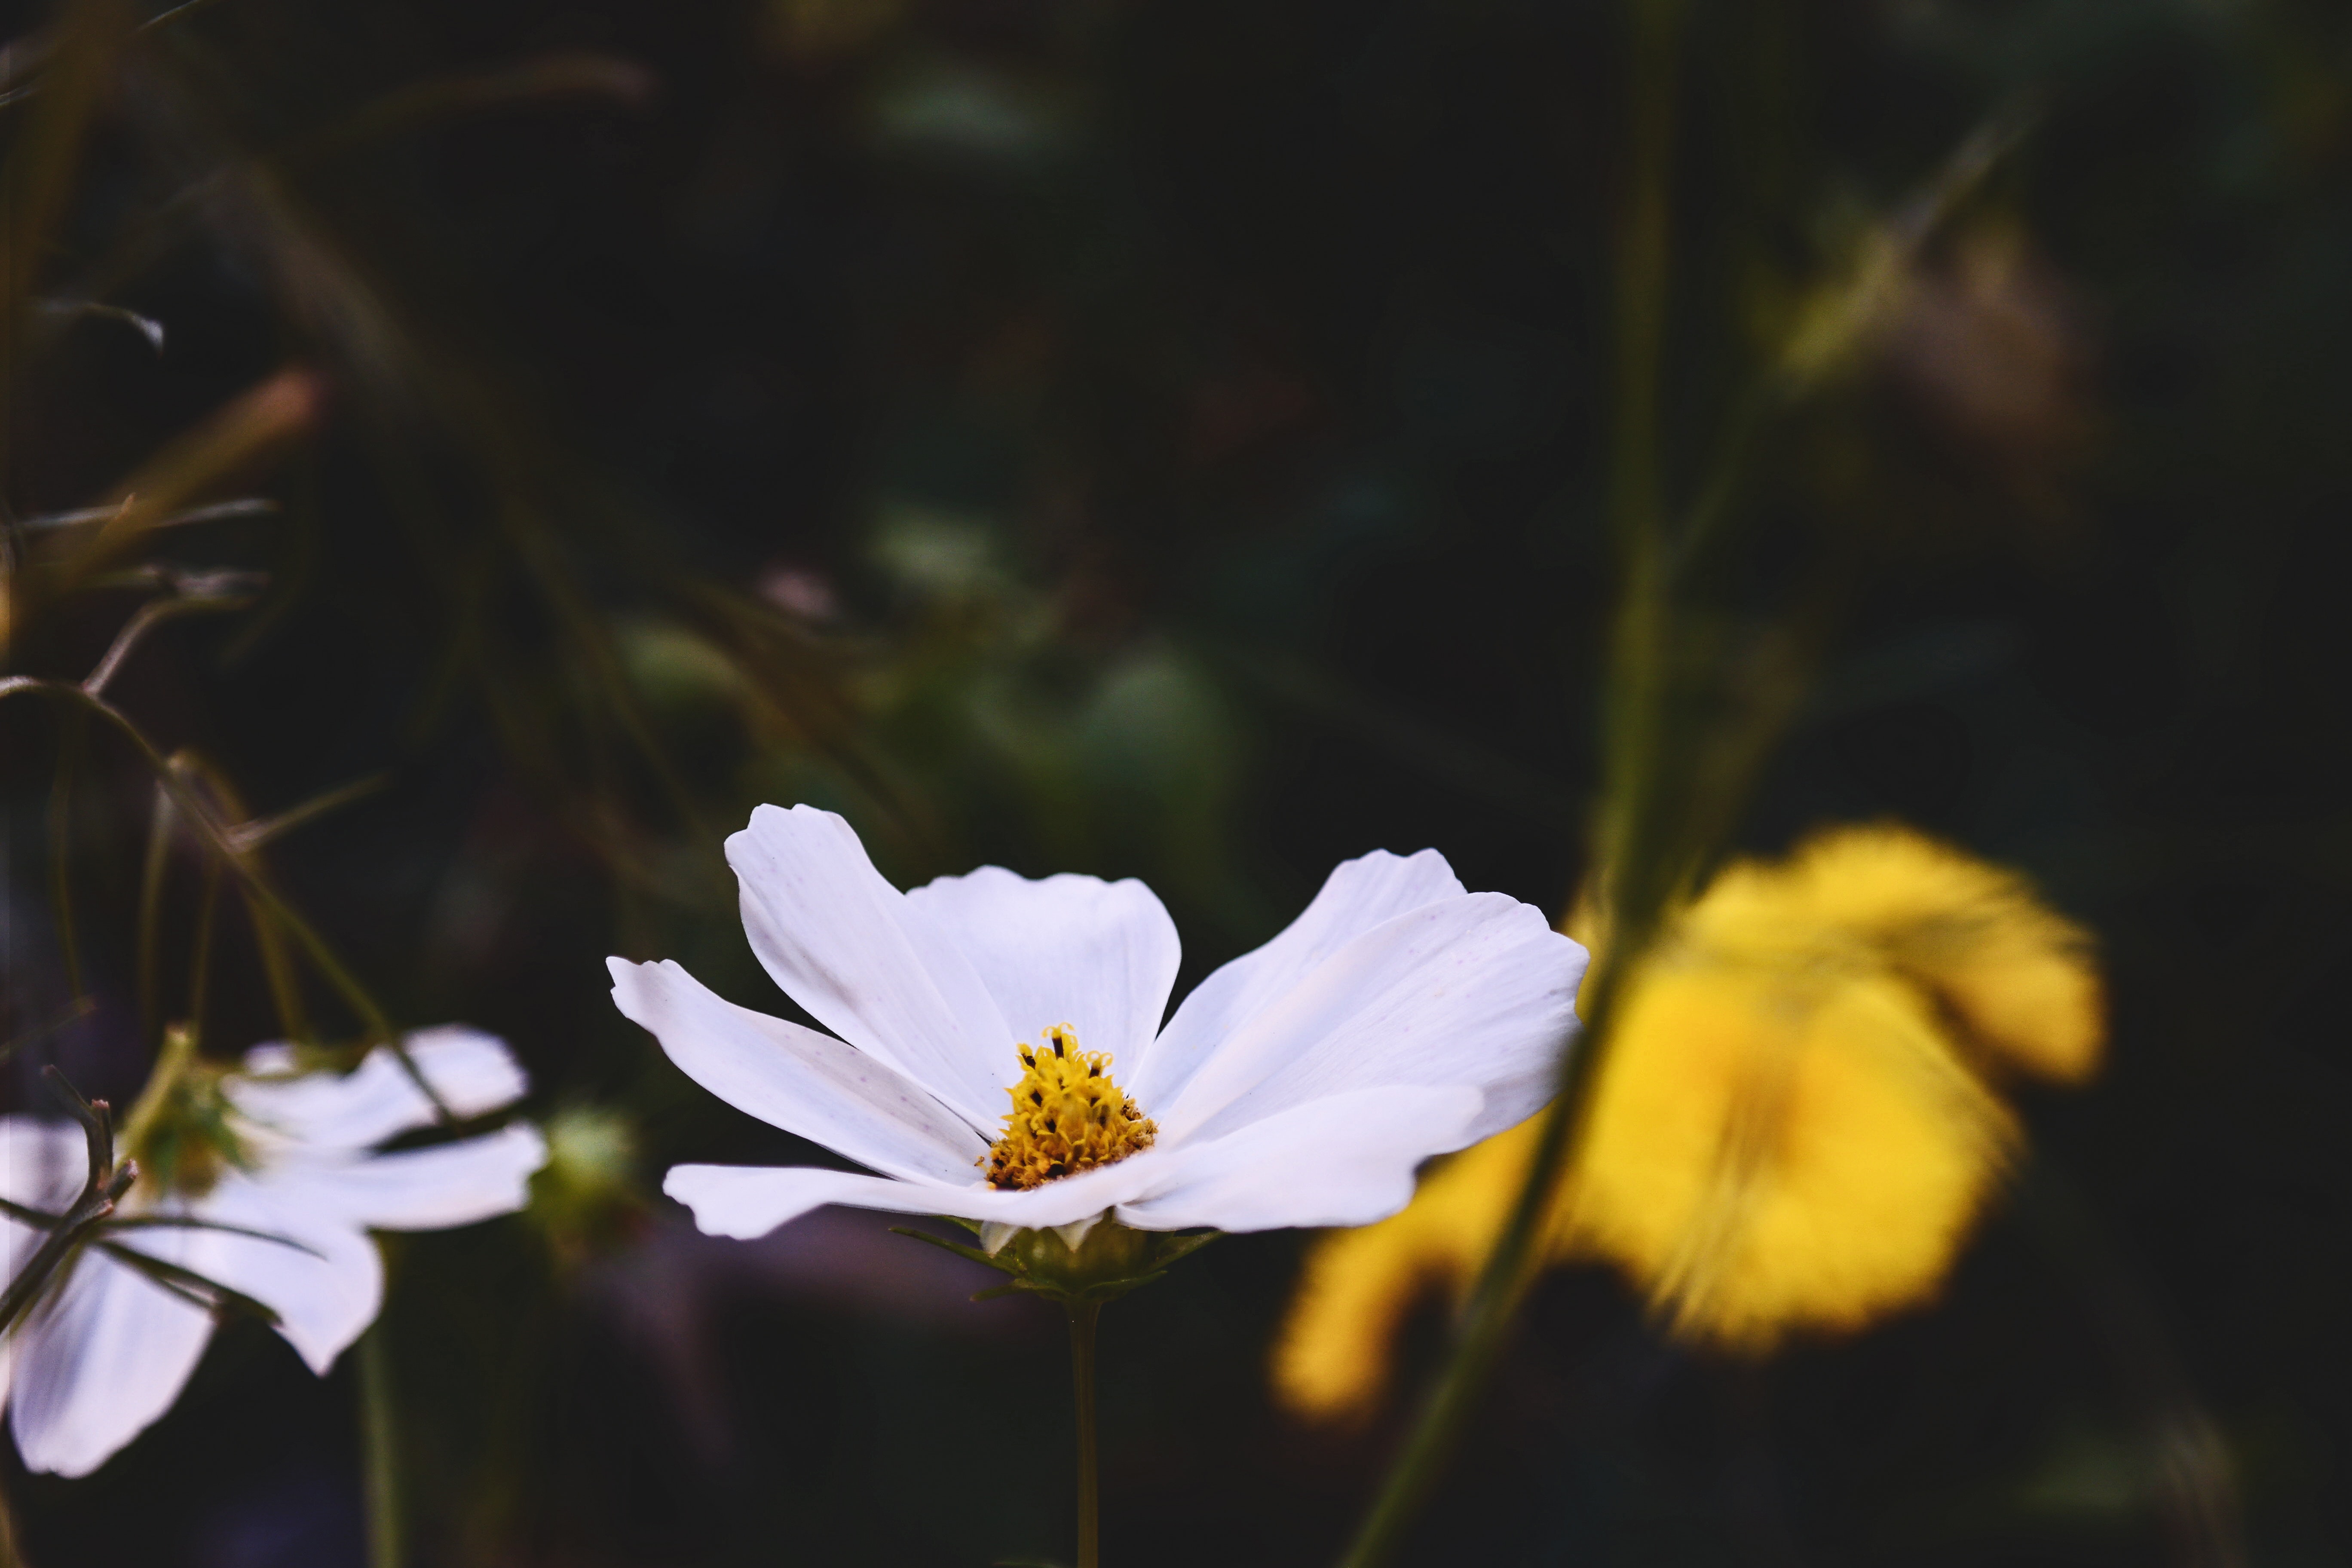 White petal flower near yellow flower during daytime photo